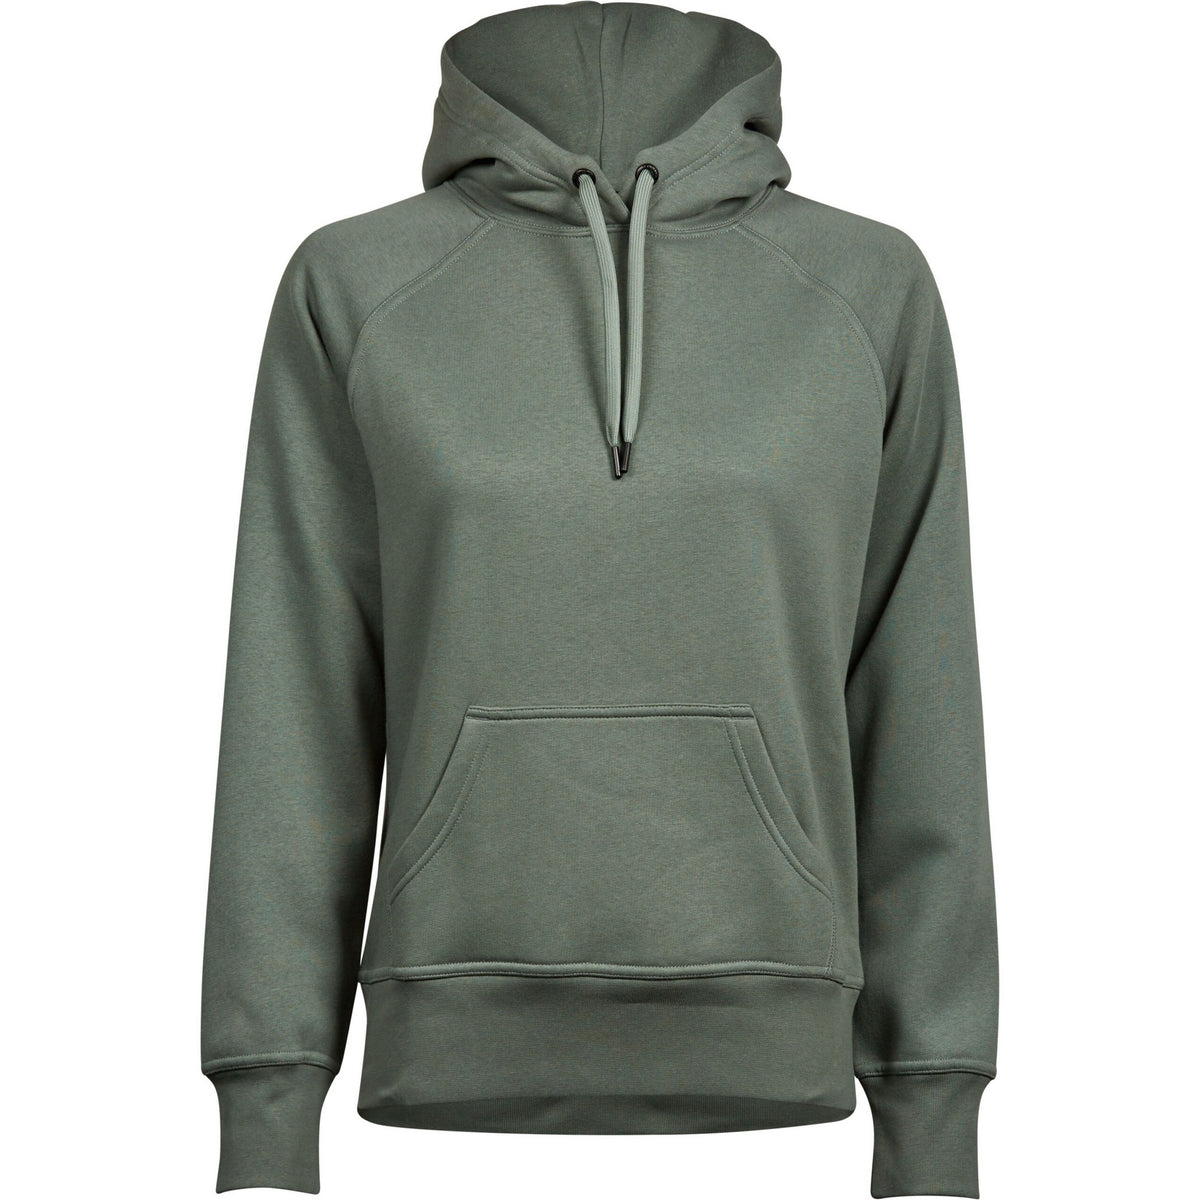 Tee Jays Ladies Hooded Sweatshirt - TJ5431 - Size: Small to 2XL